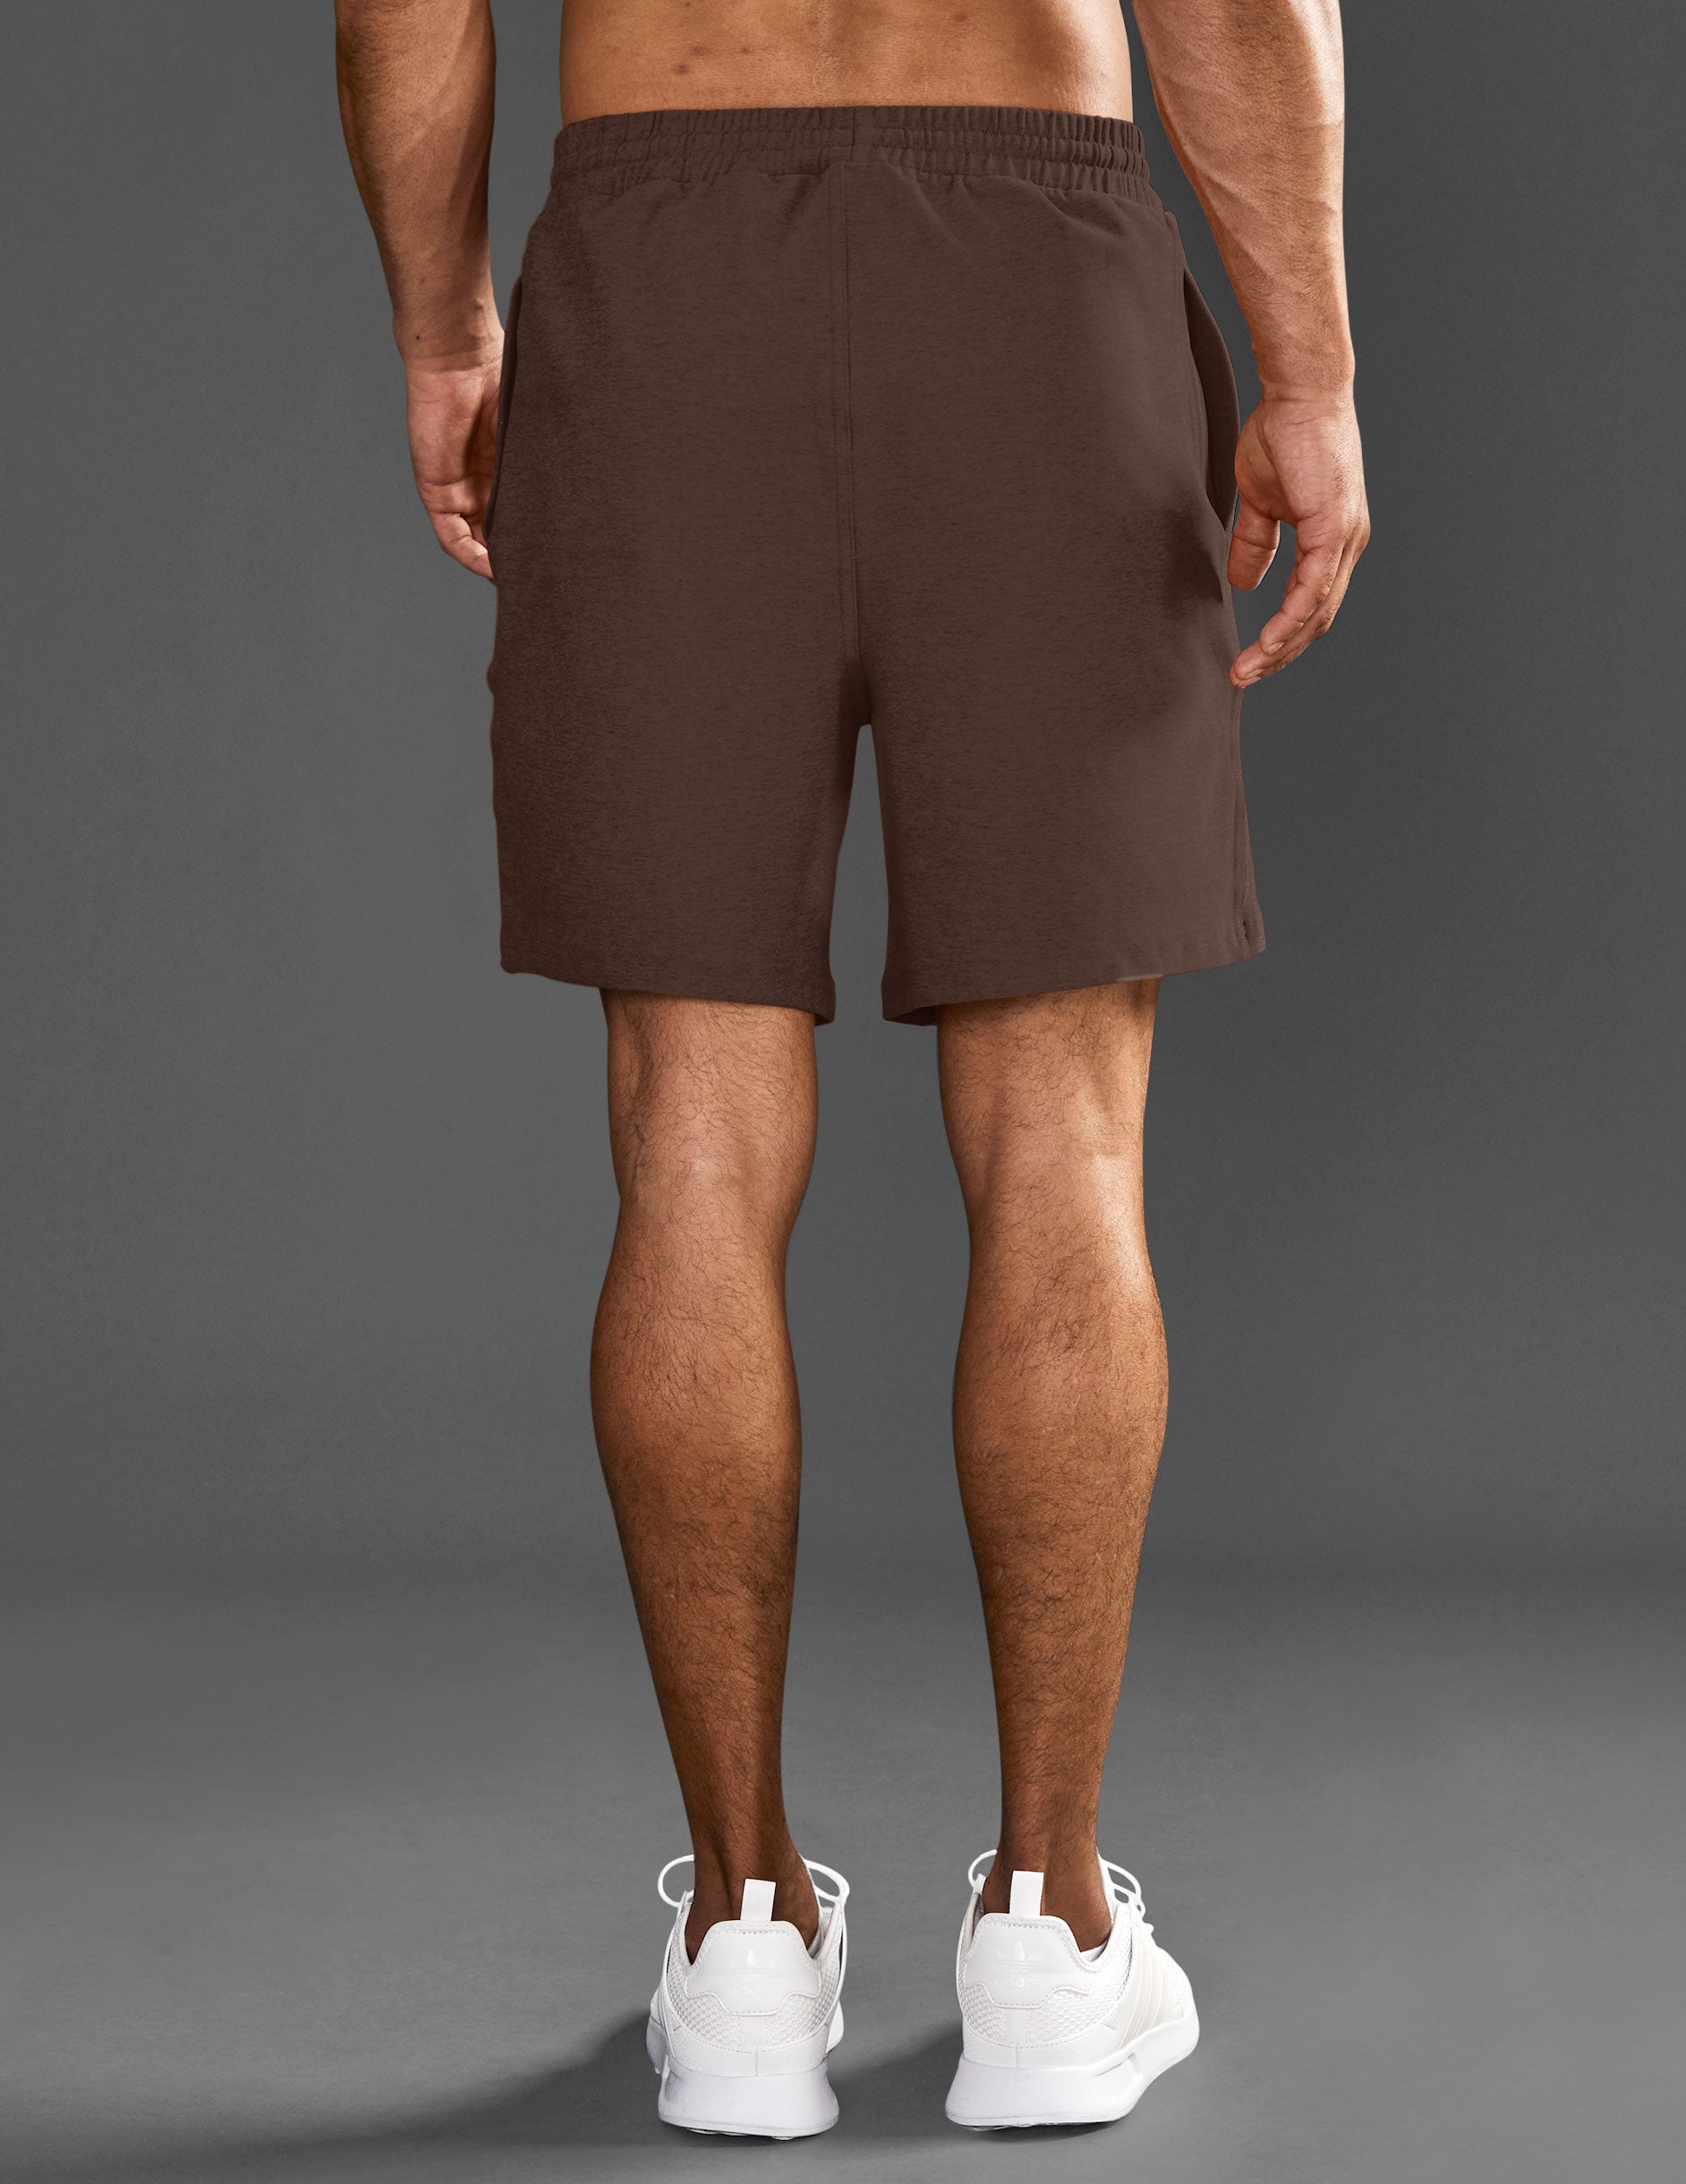 brown men's shorts. 